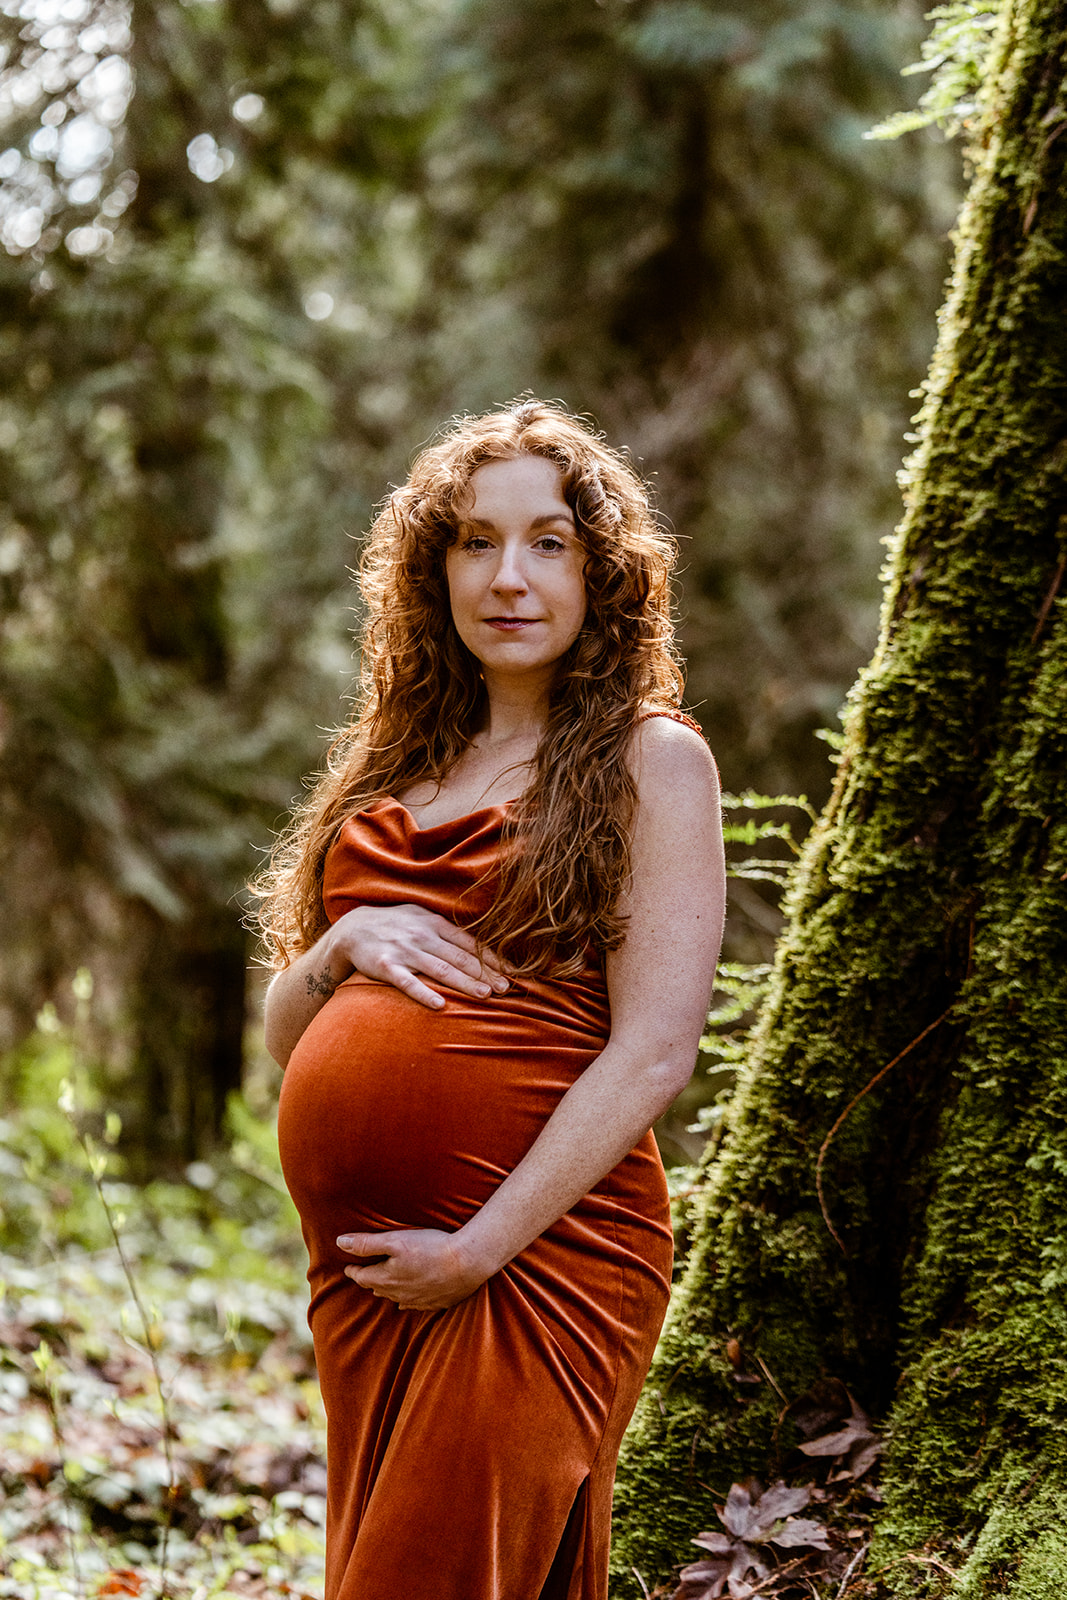 Rainforest Seward Park maternity photoshoot in Seattle, WA